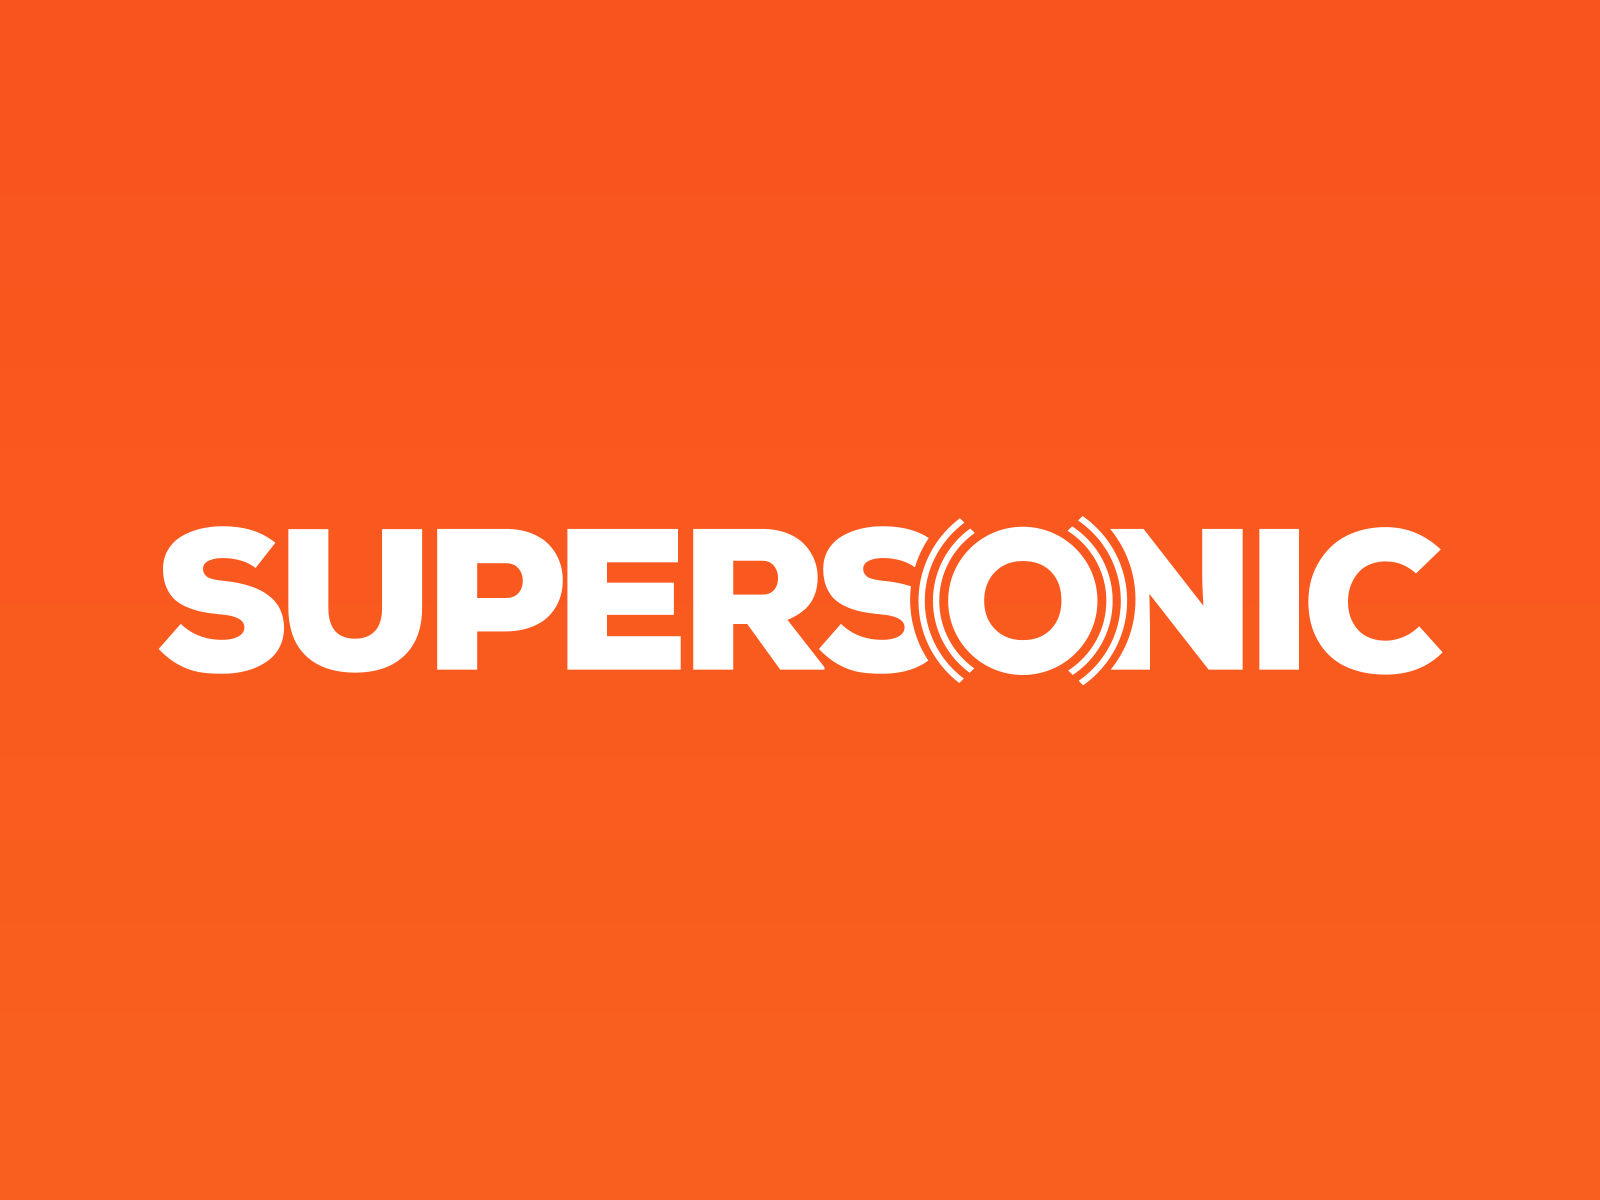 Supersonic Podcast Branding